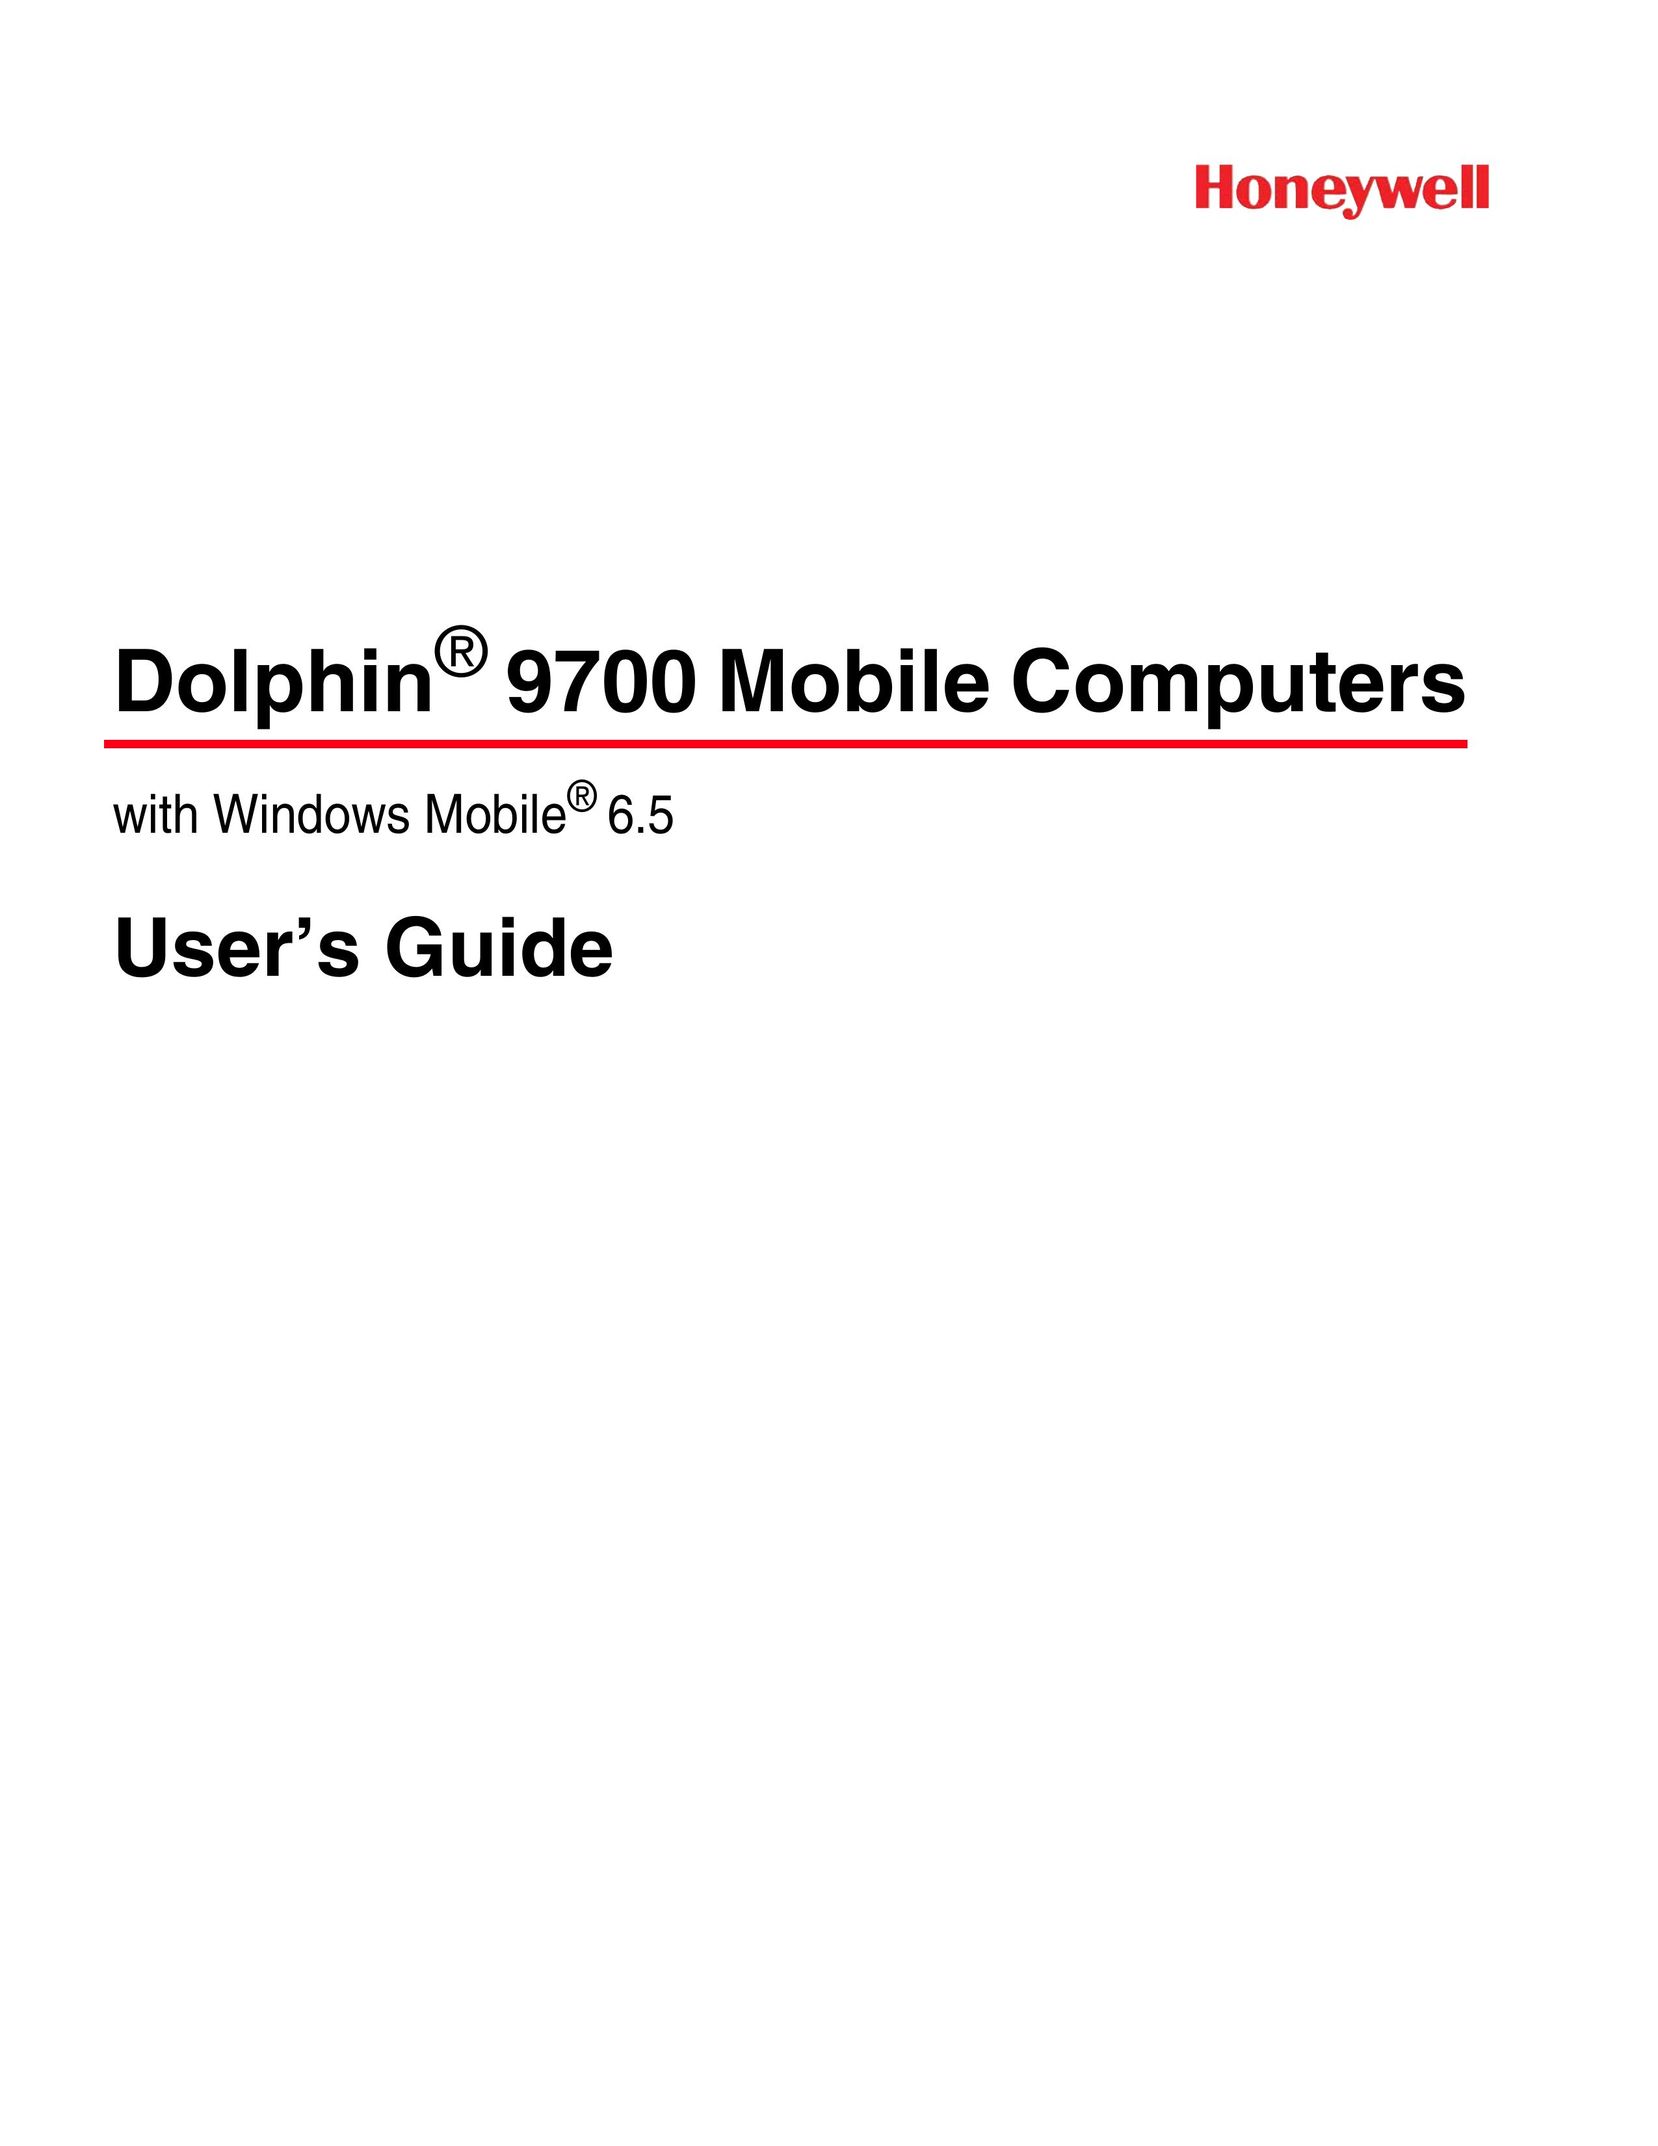 Honeywell Dolphin 9700 Laptop User Manual